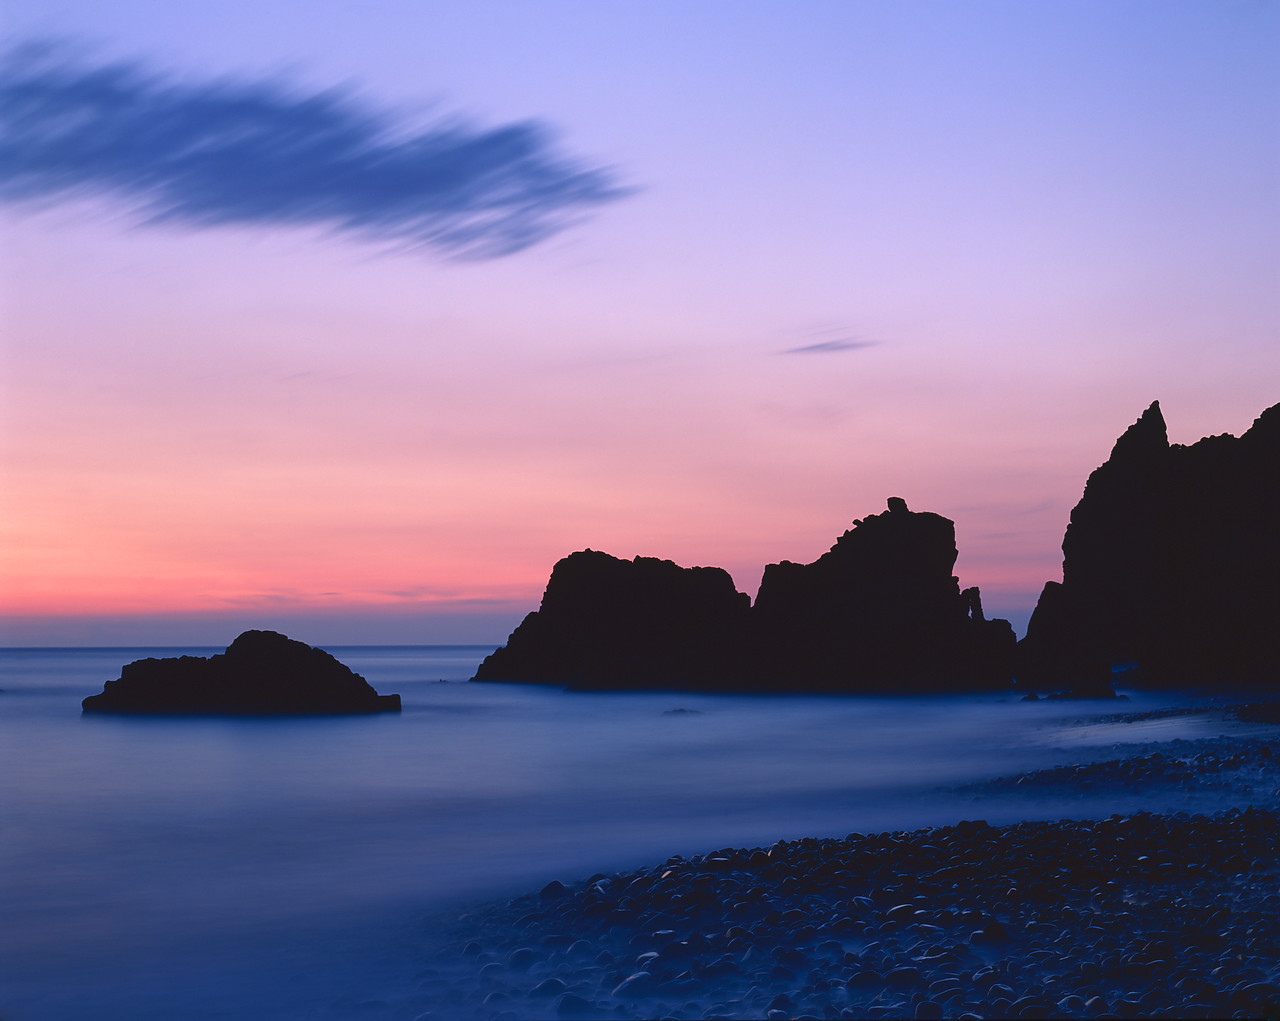 #913465-1 - Twilight at Sandy Mouth Bay, Cornwall, England